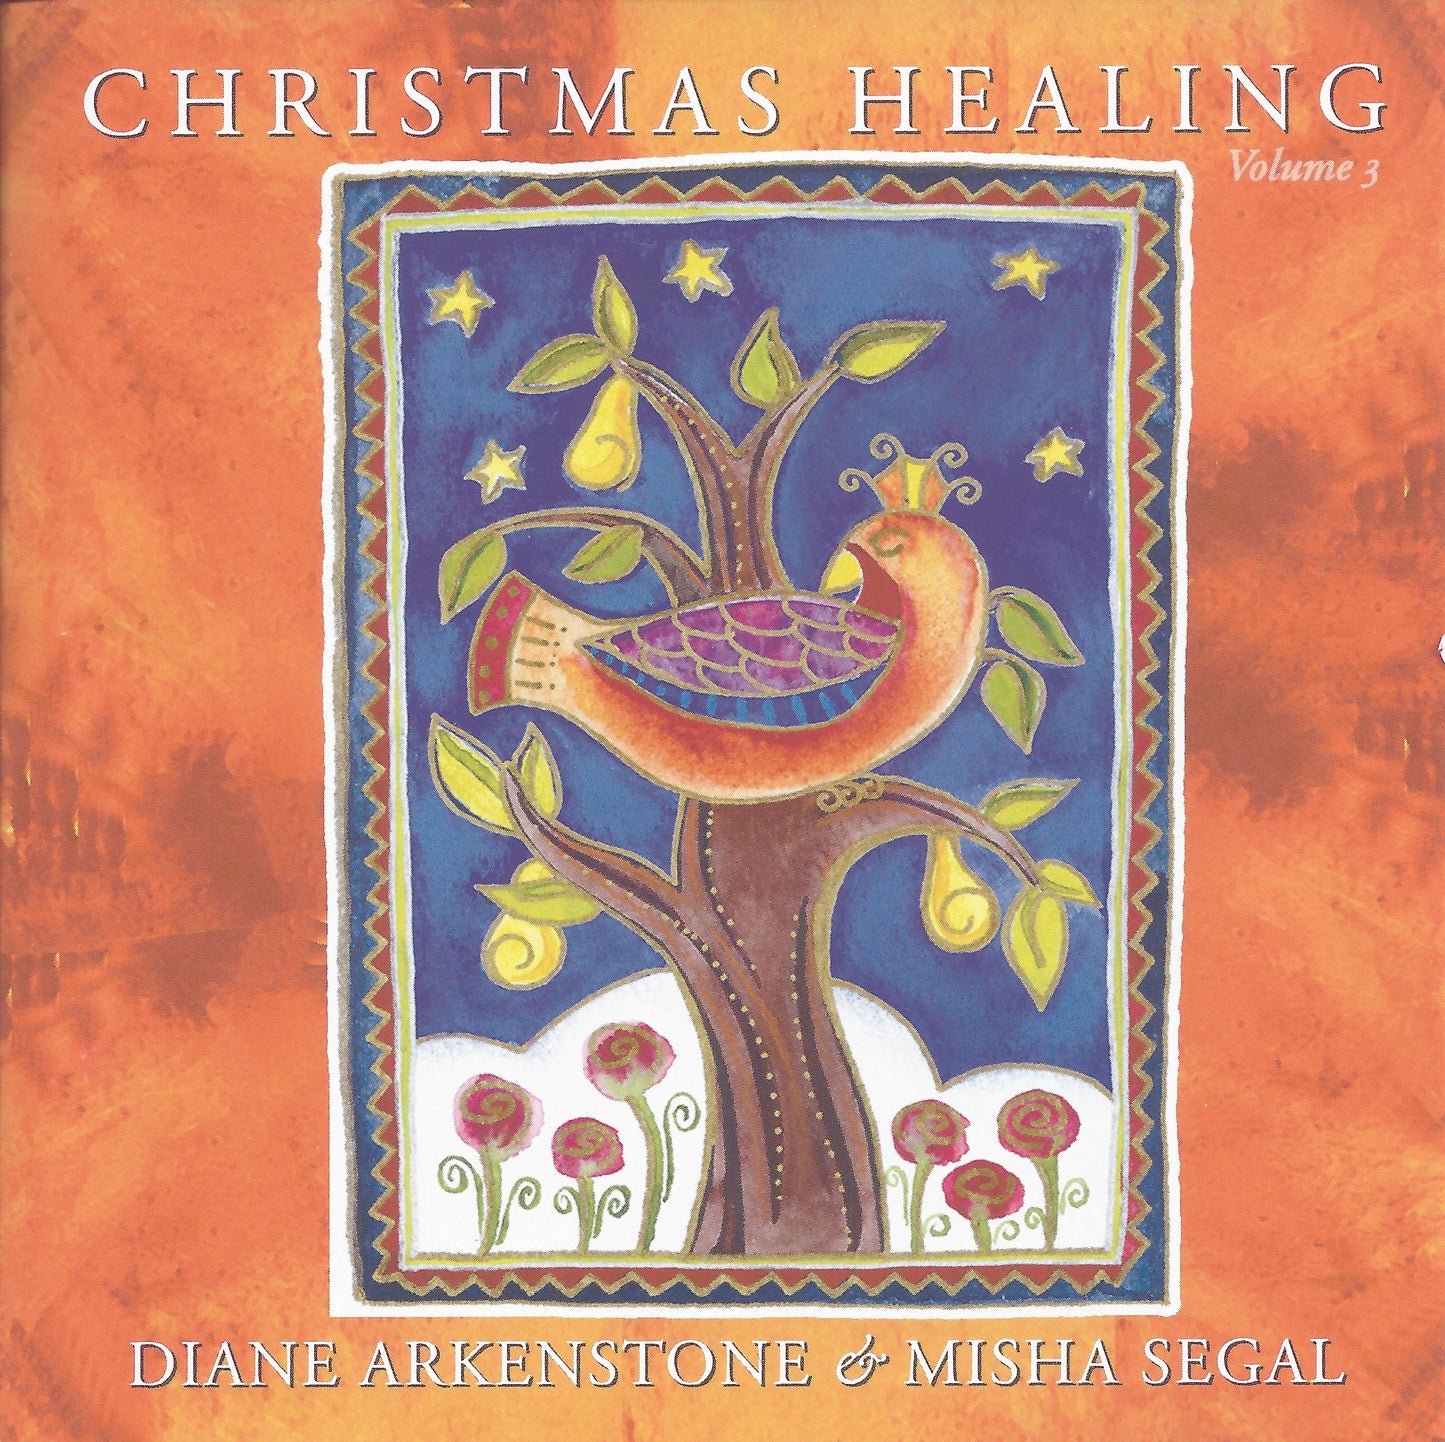 Diane Arkenstone & Misha Segal - Christmas Healing Volume 3 Album